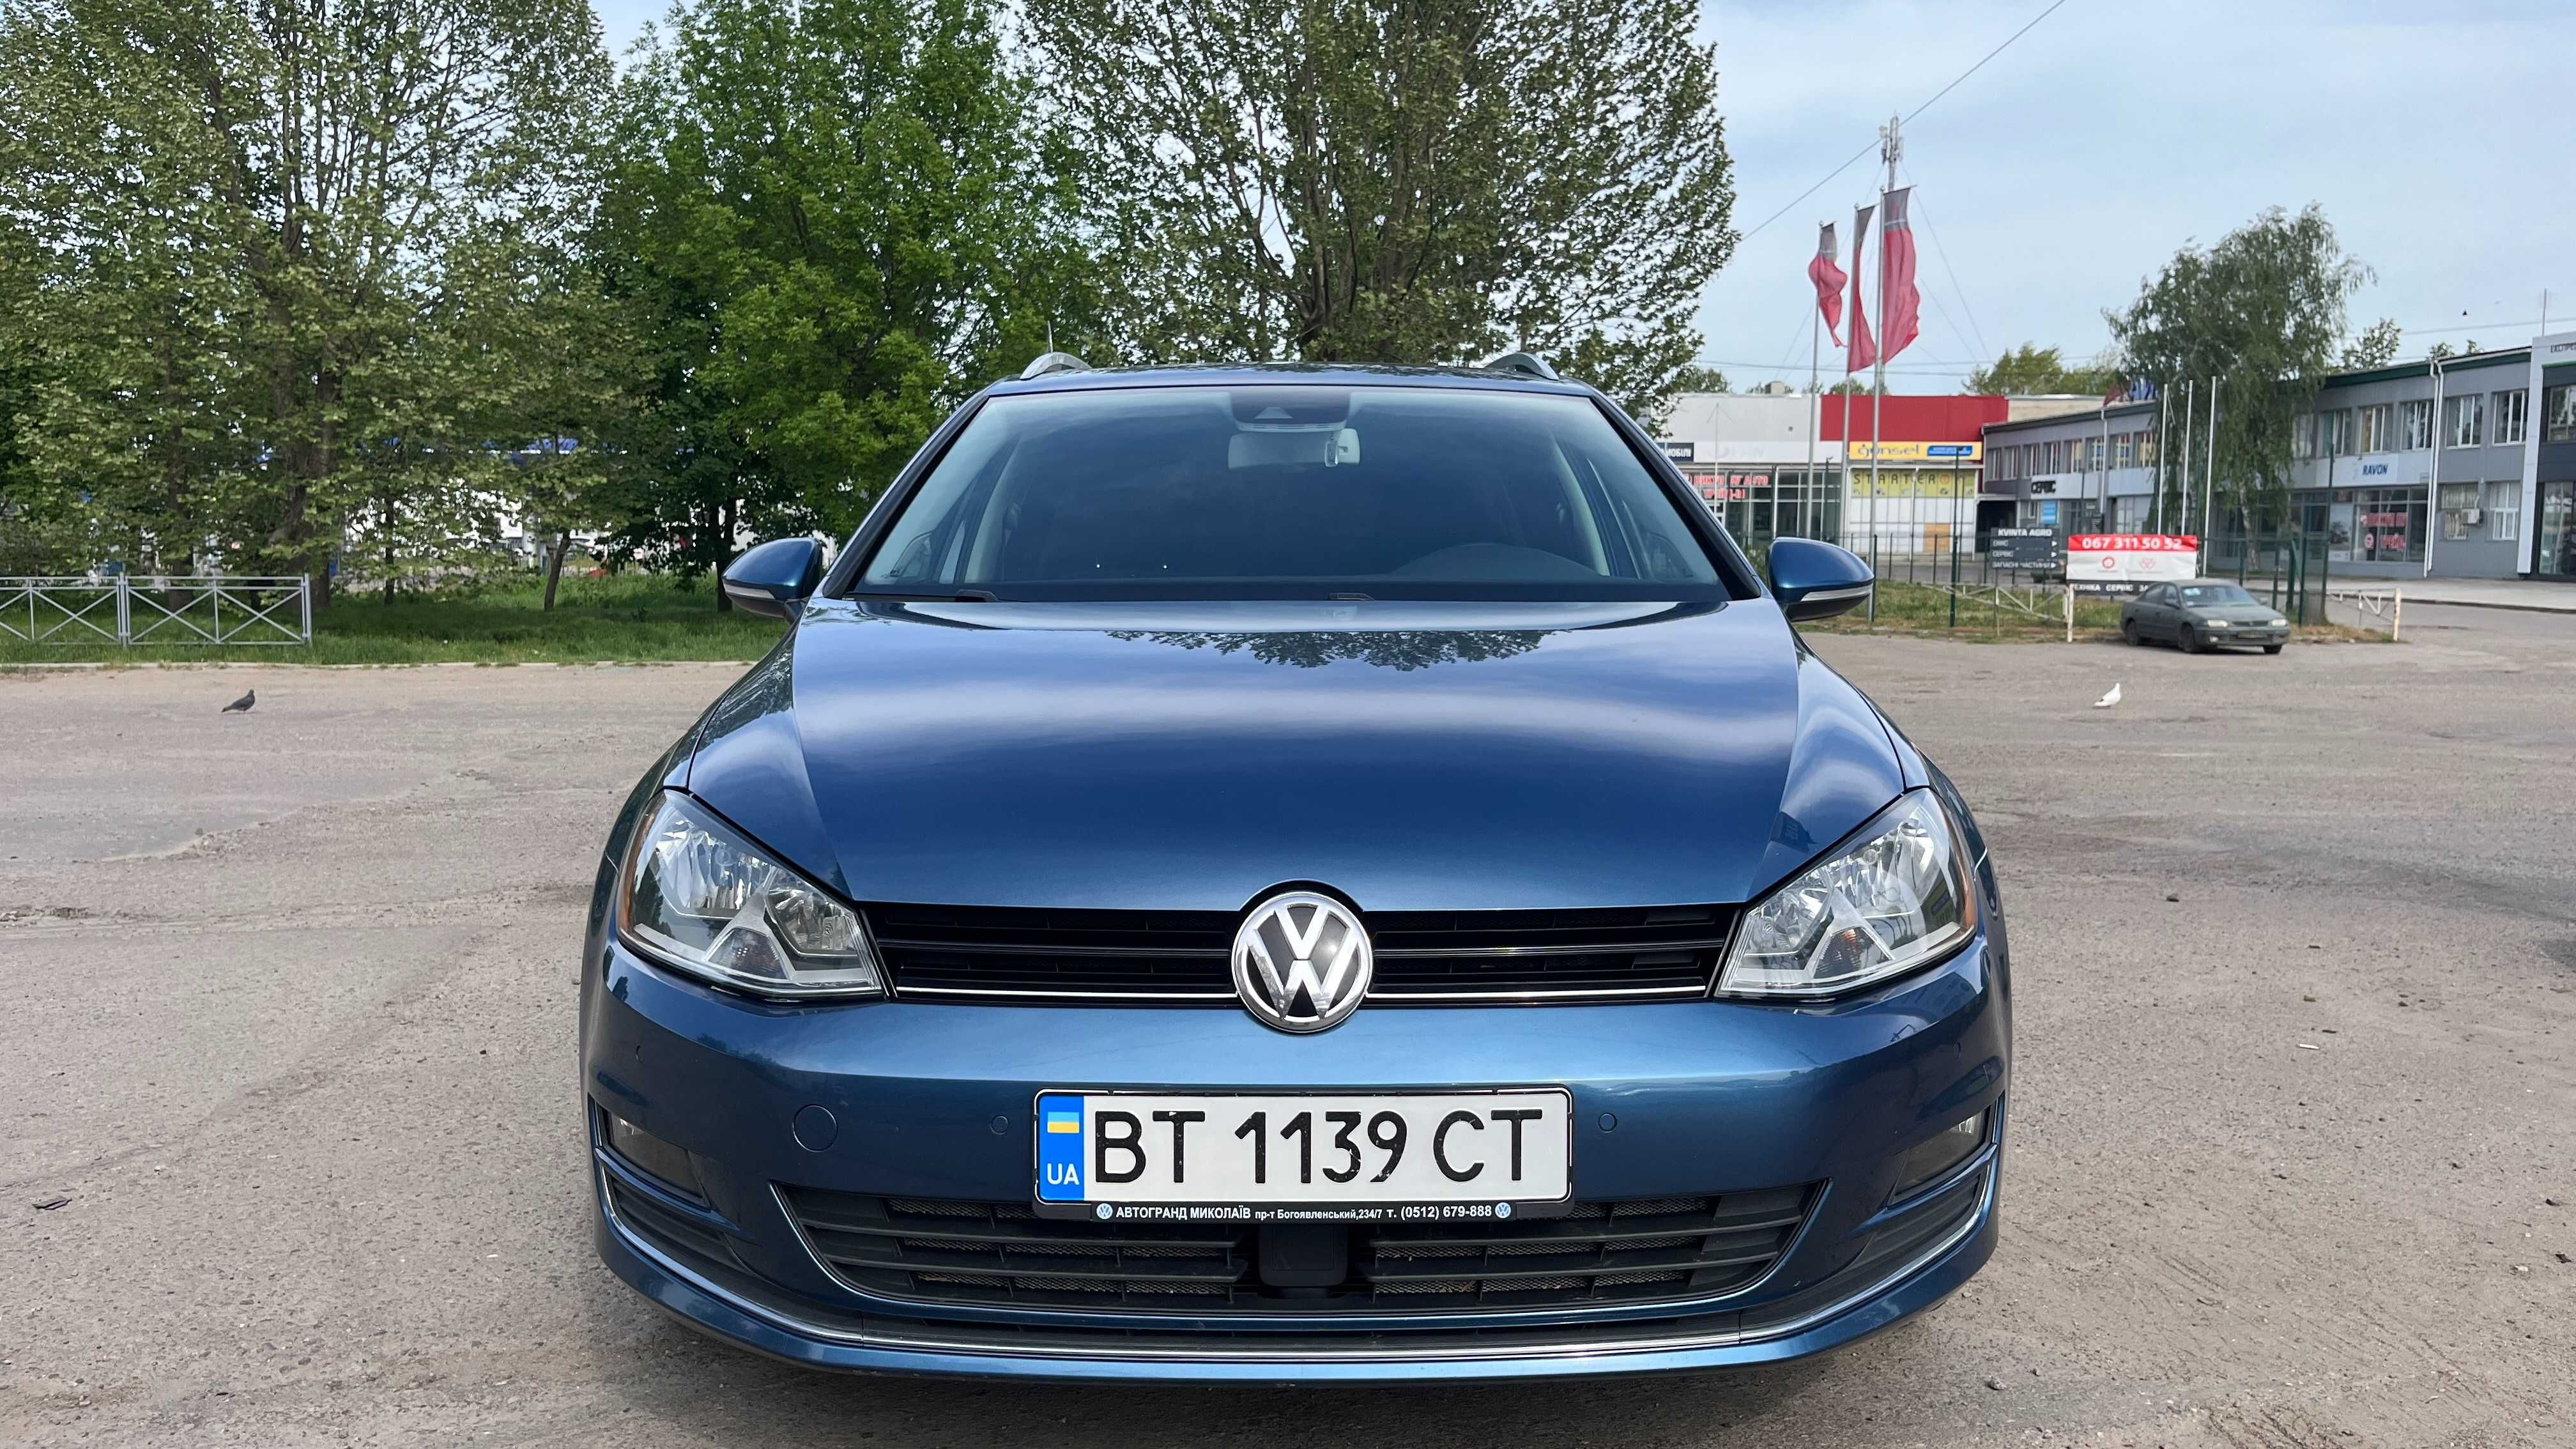 Продам автомобіль Volkswagen Golf Oficial 2.0 TDI , 2015 г. Автомат